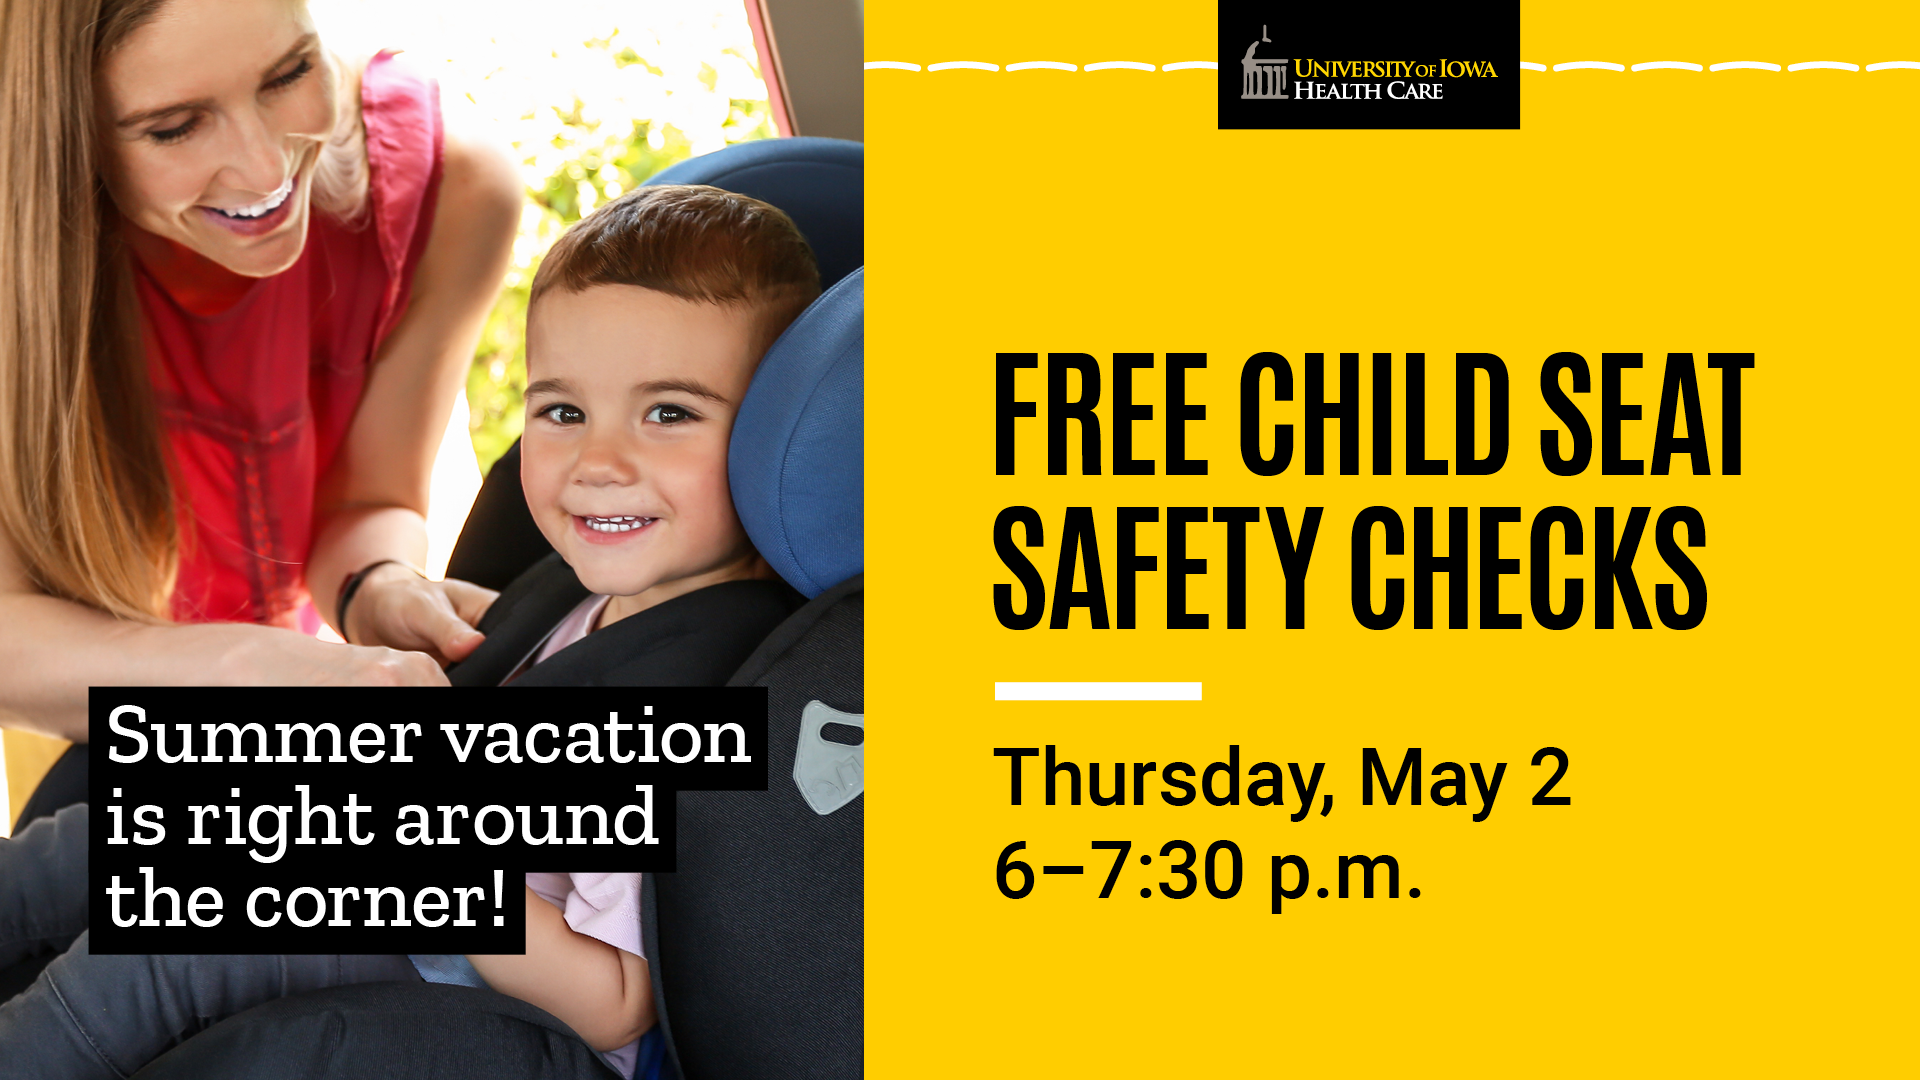 Free Child Seat Safety Checks promotional image